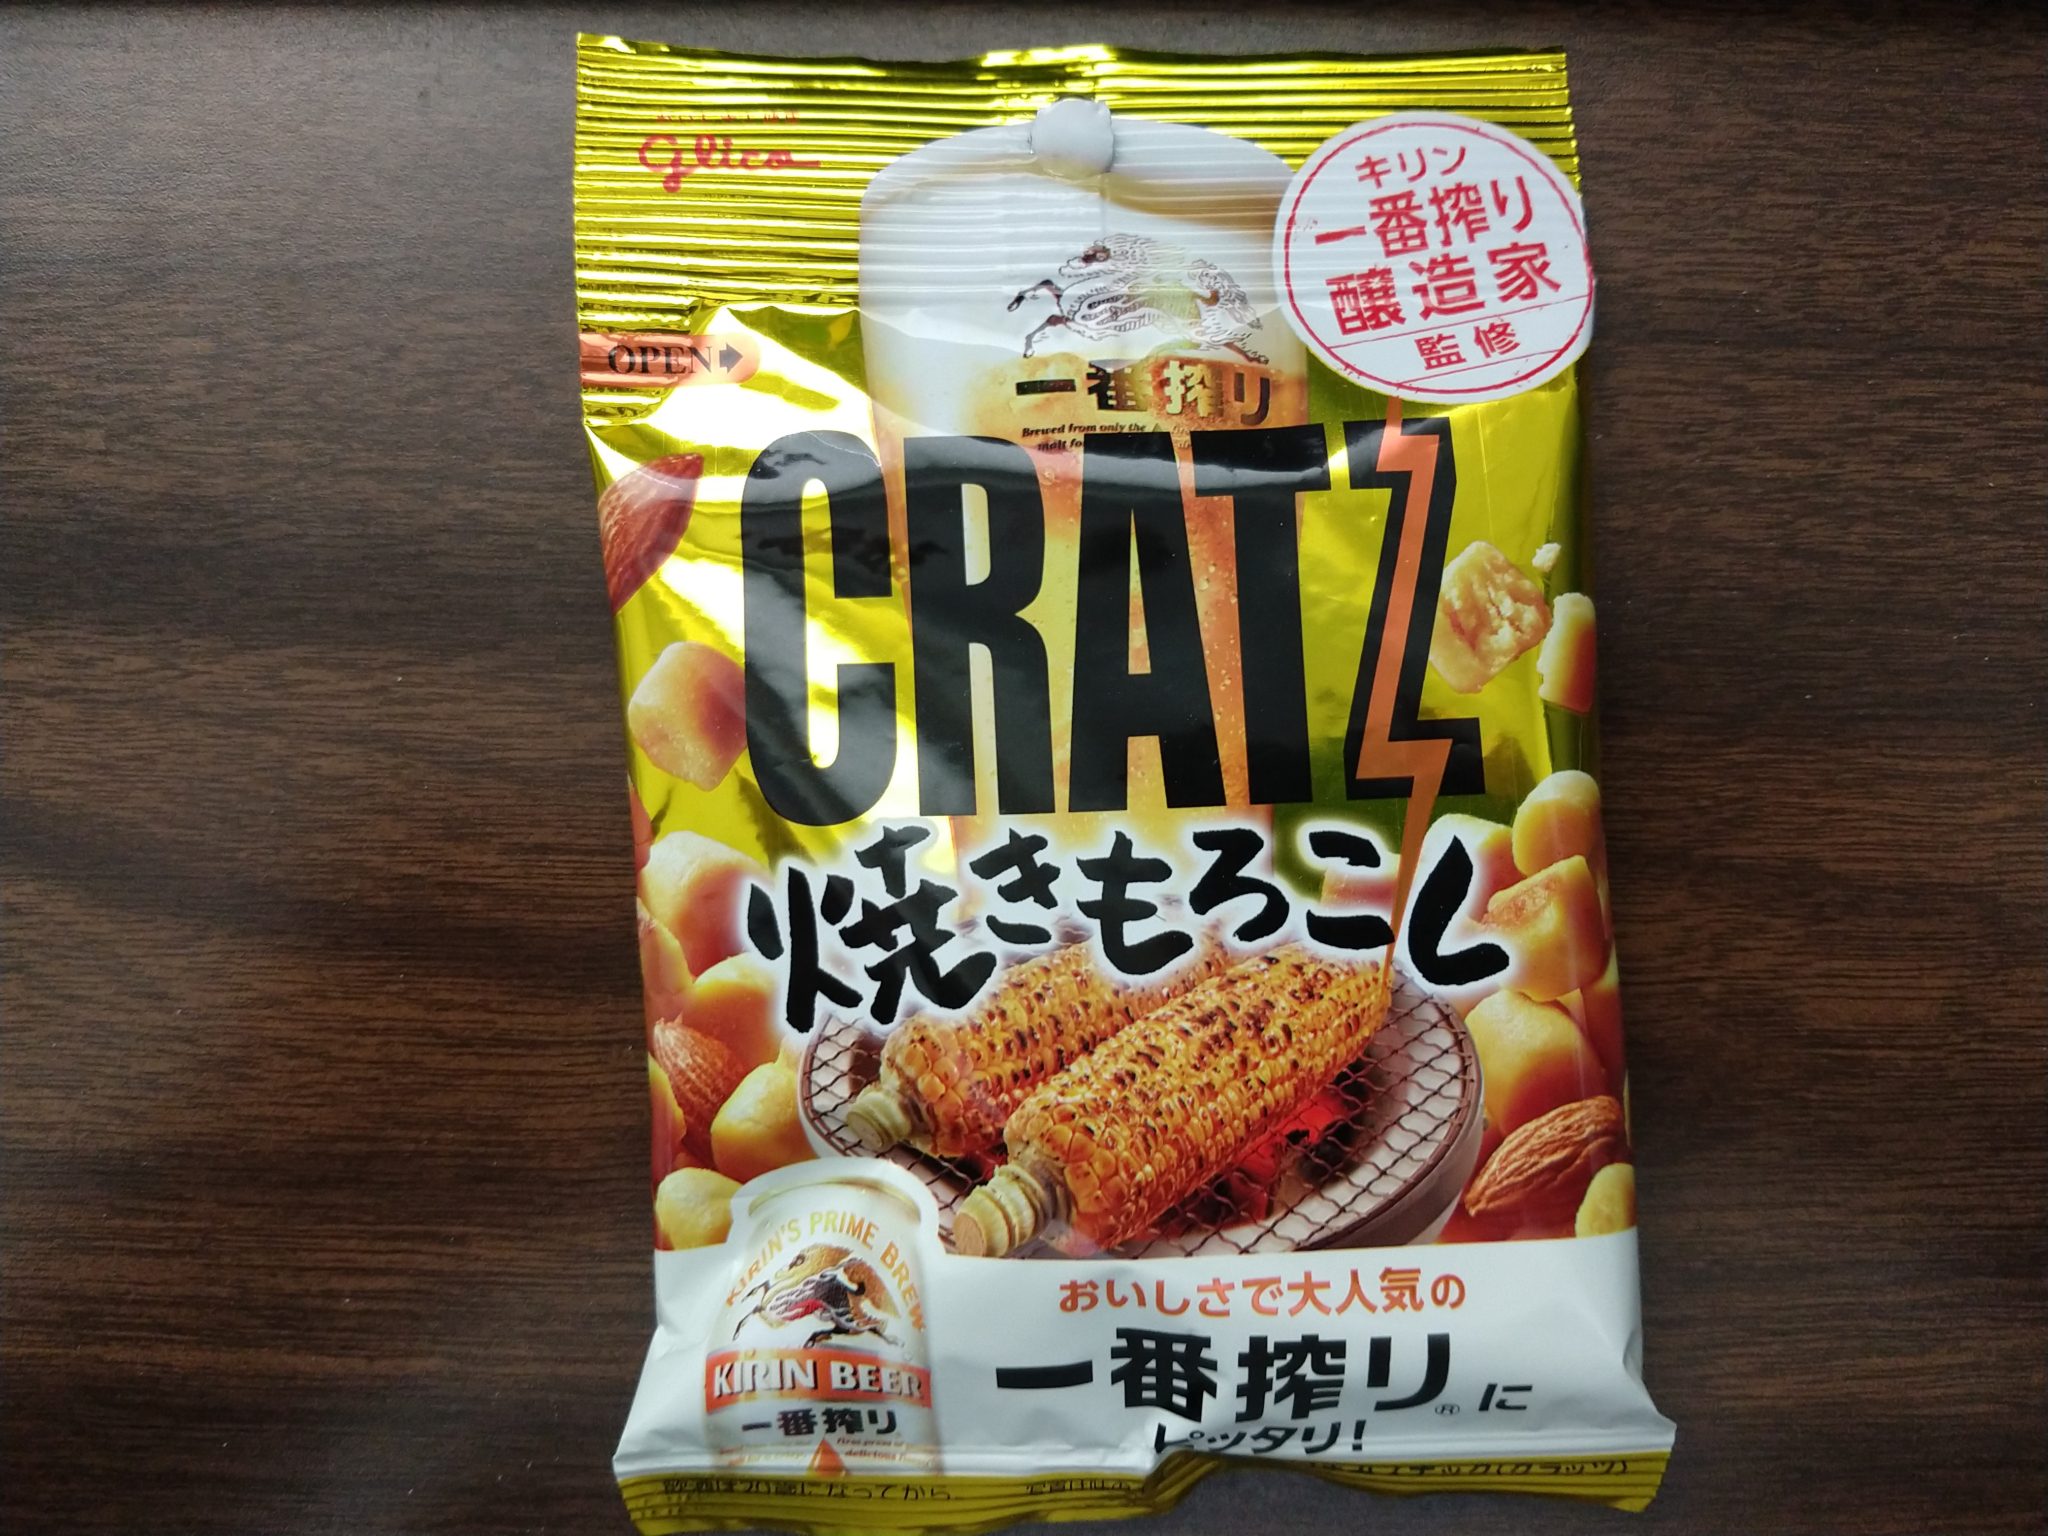 Cratz – Grilled Corn